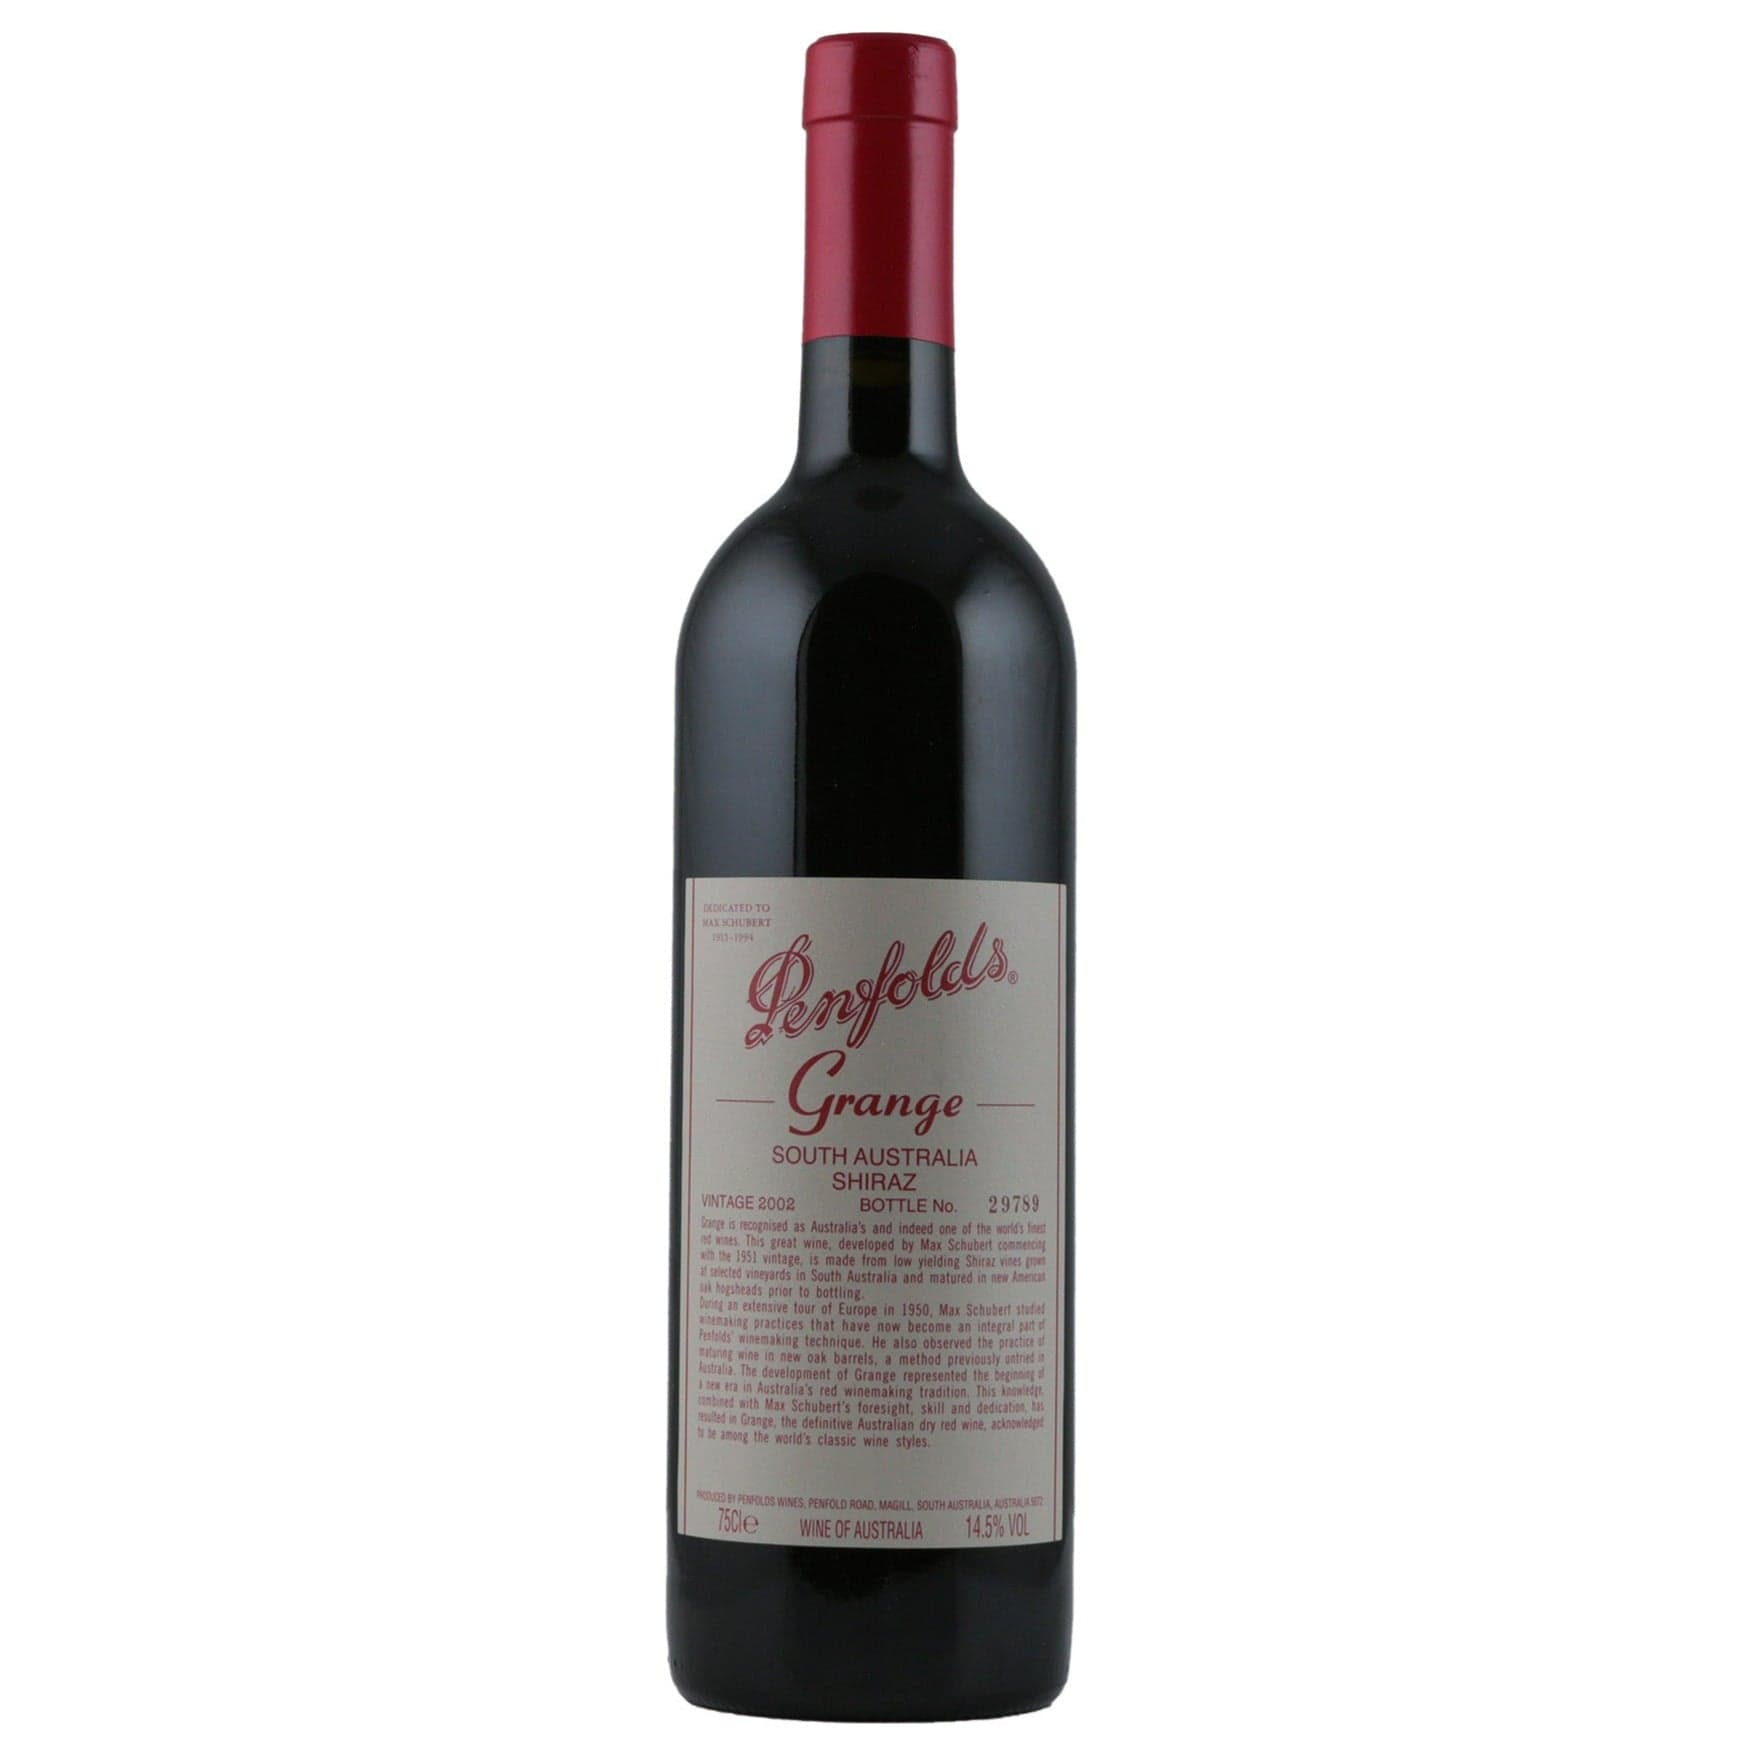 Single bottle of Red wine Penfolds, Grange Bin 95 Shiraz, South Australia, 2002 99% Shiraz & 1% Cabernet Sauvignon